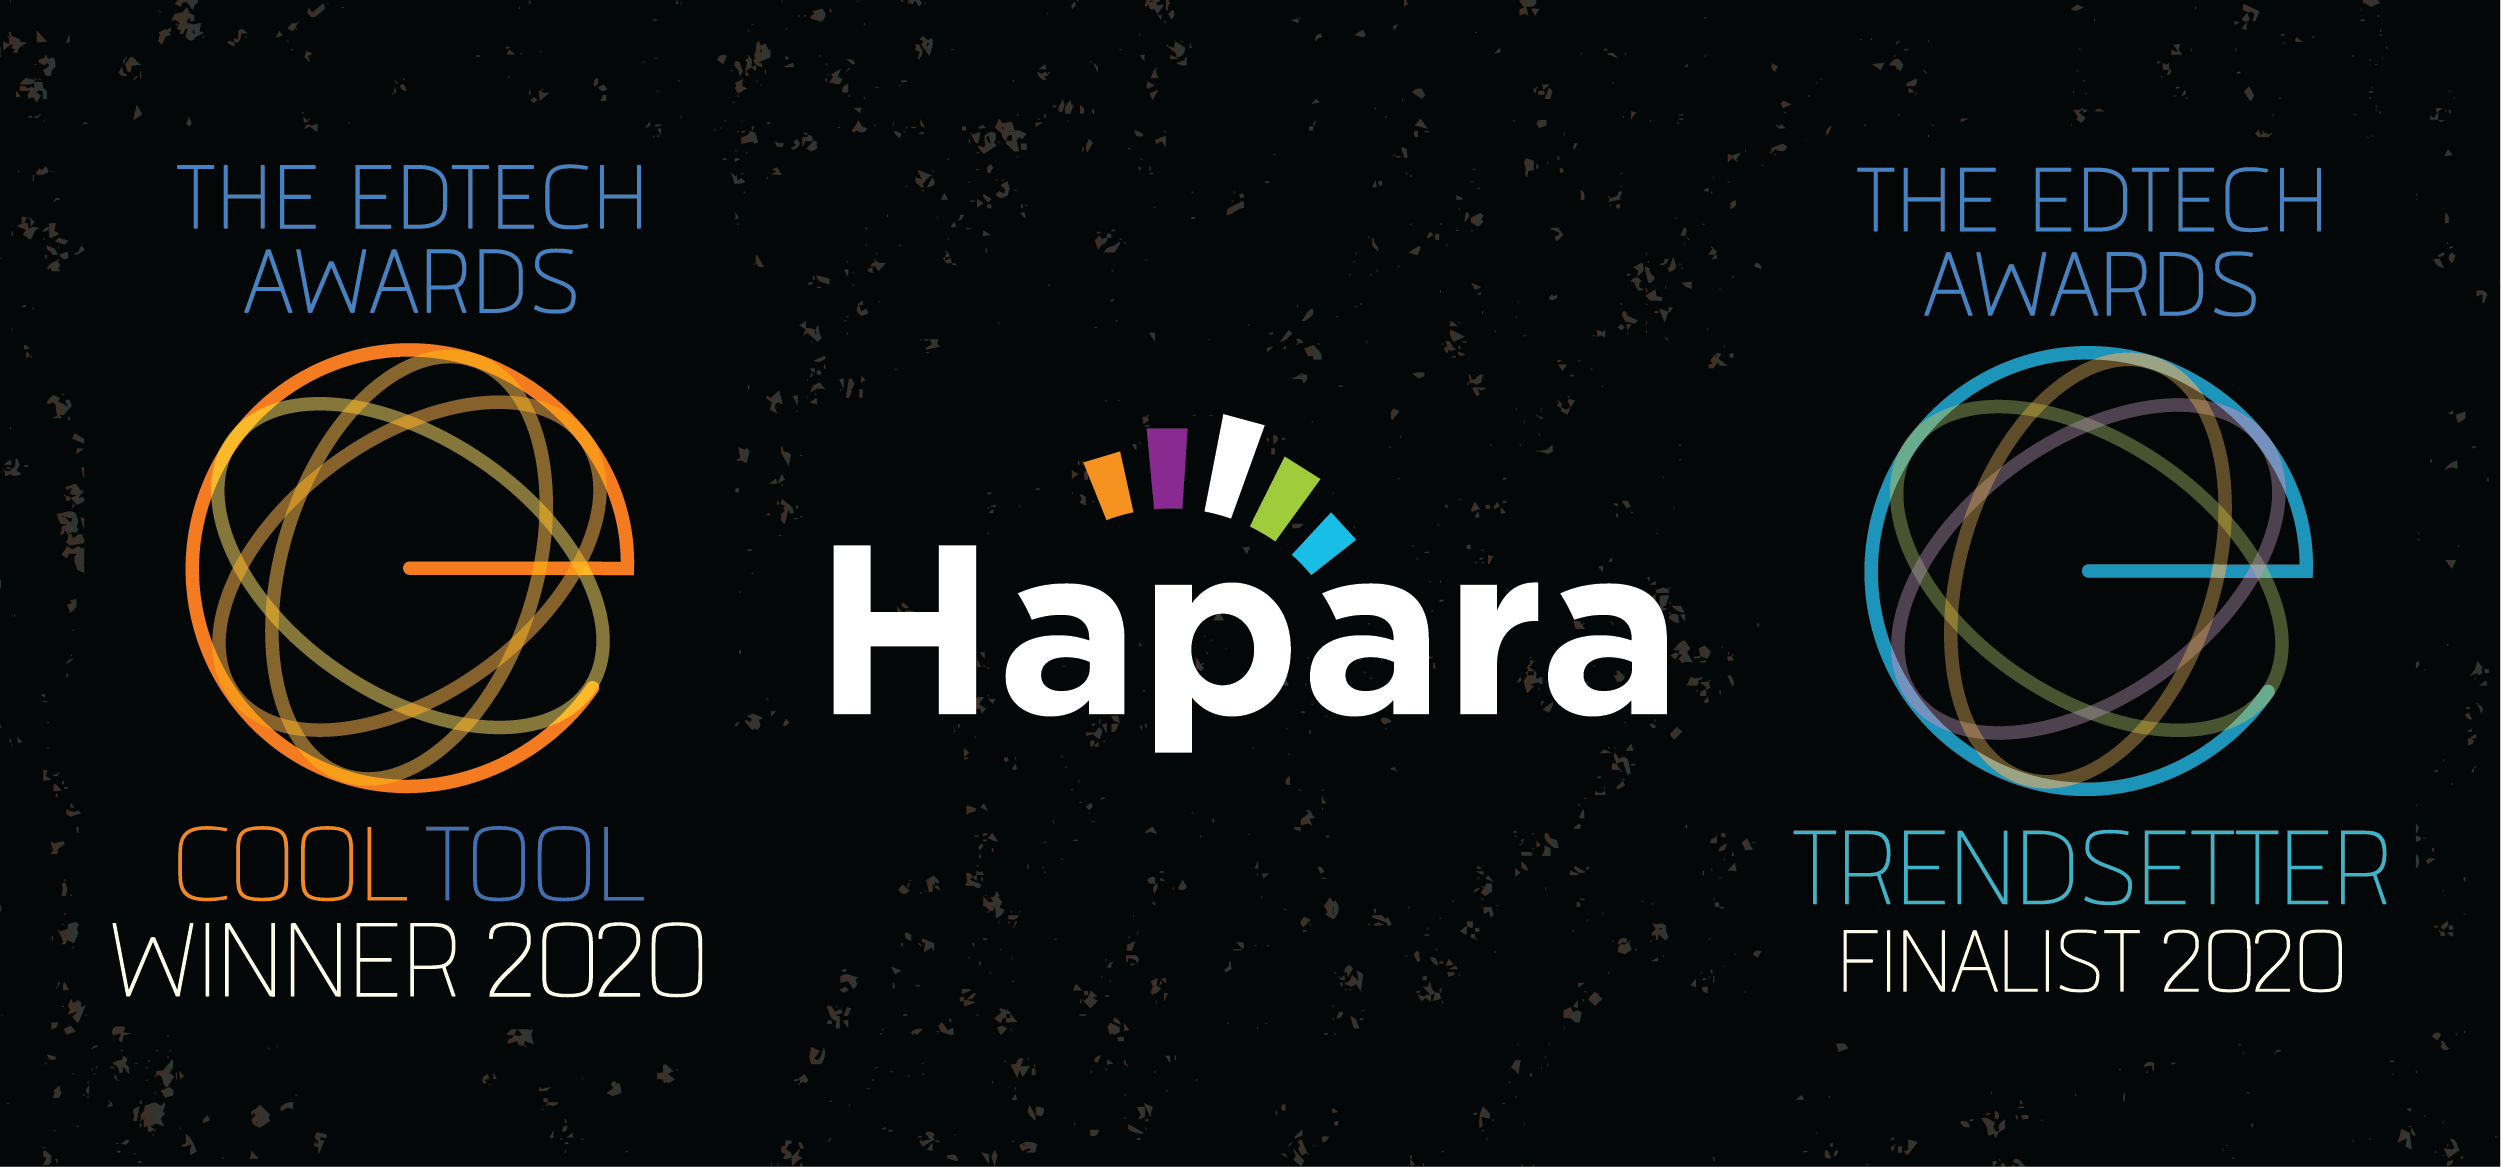 K-12 Edtech company Hāpara wins two international awards